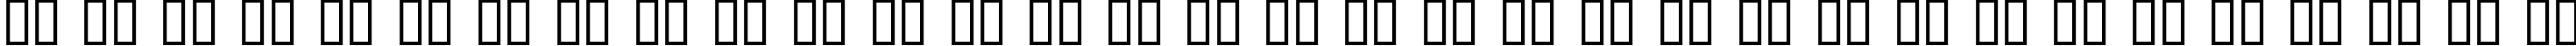 Пример написания русского алфавита шрифтом Amazon